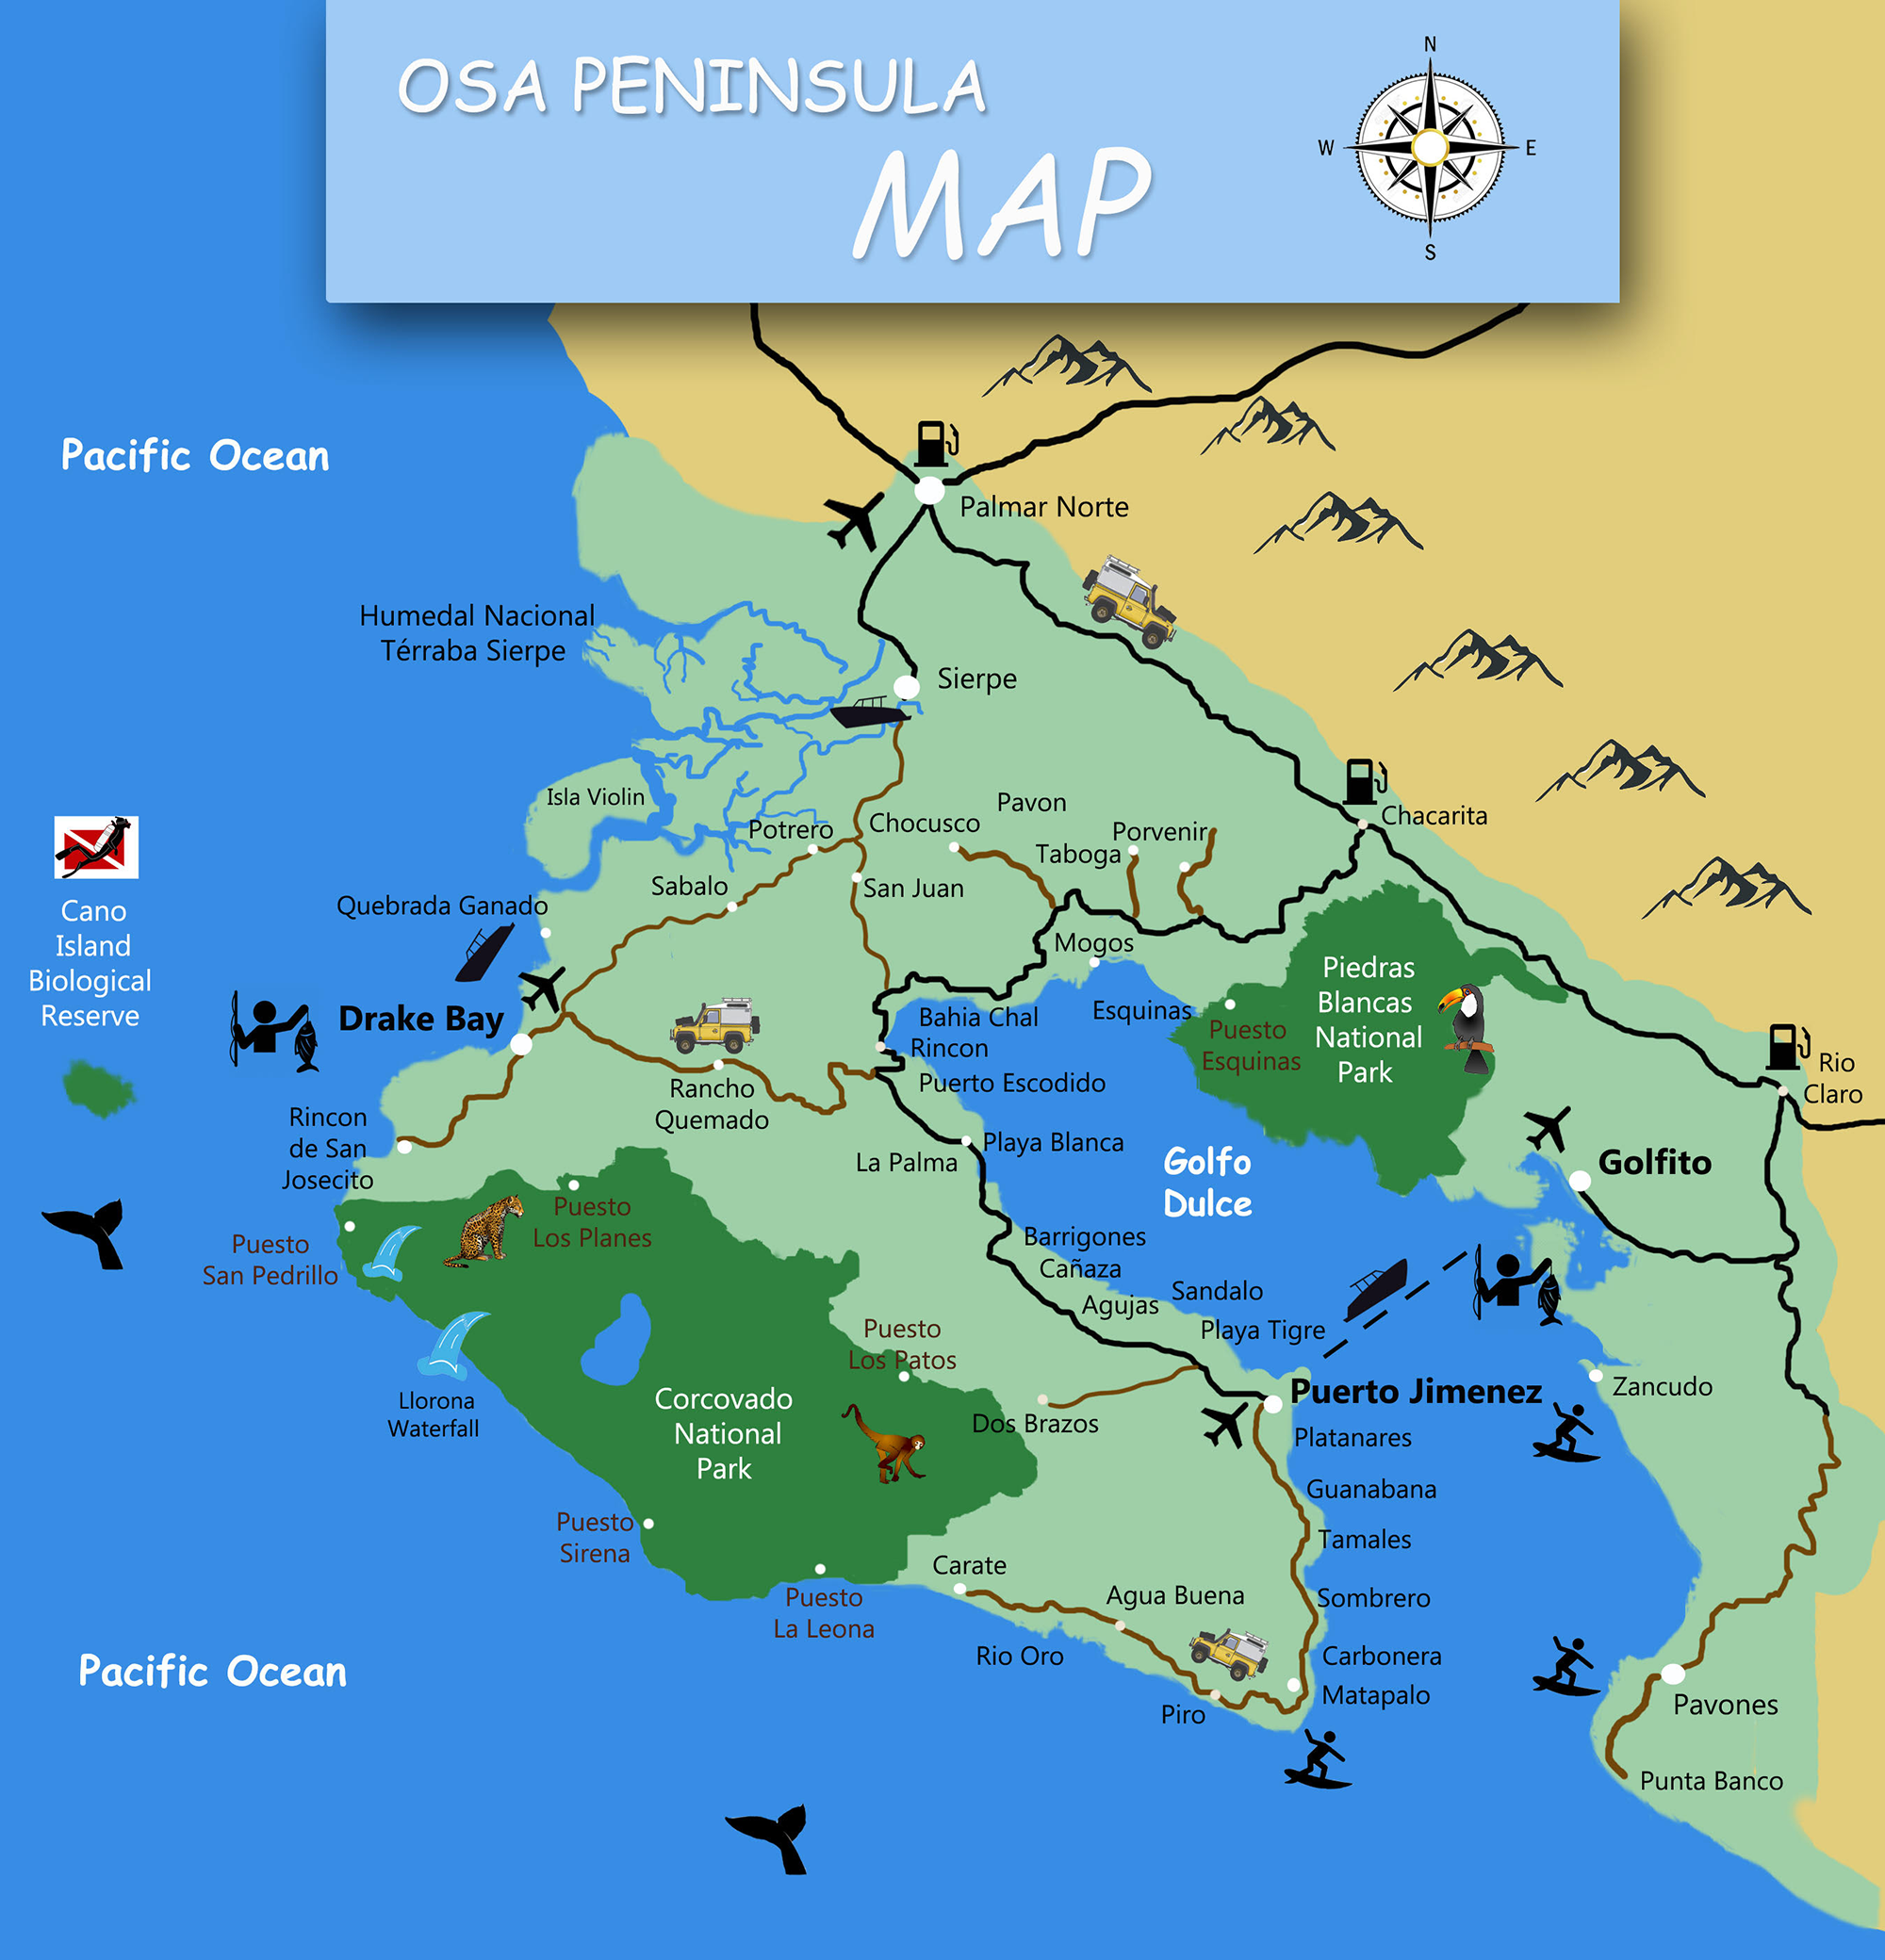 osa-peninsula-map-1.png